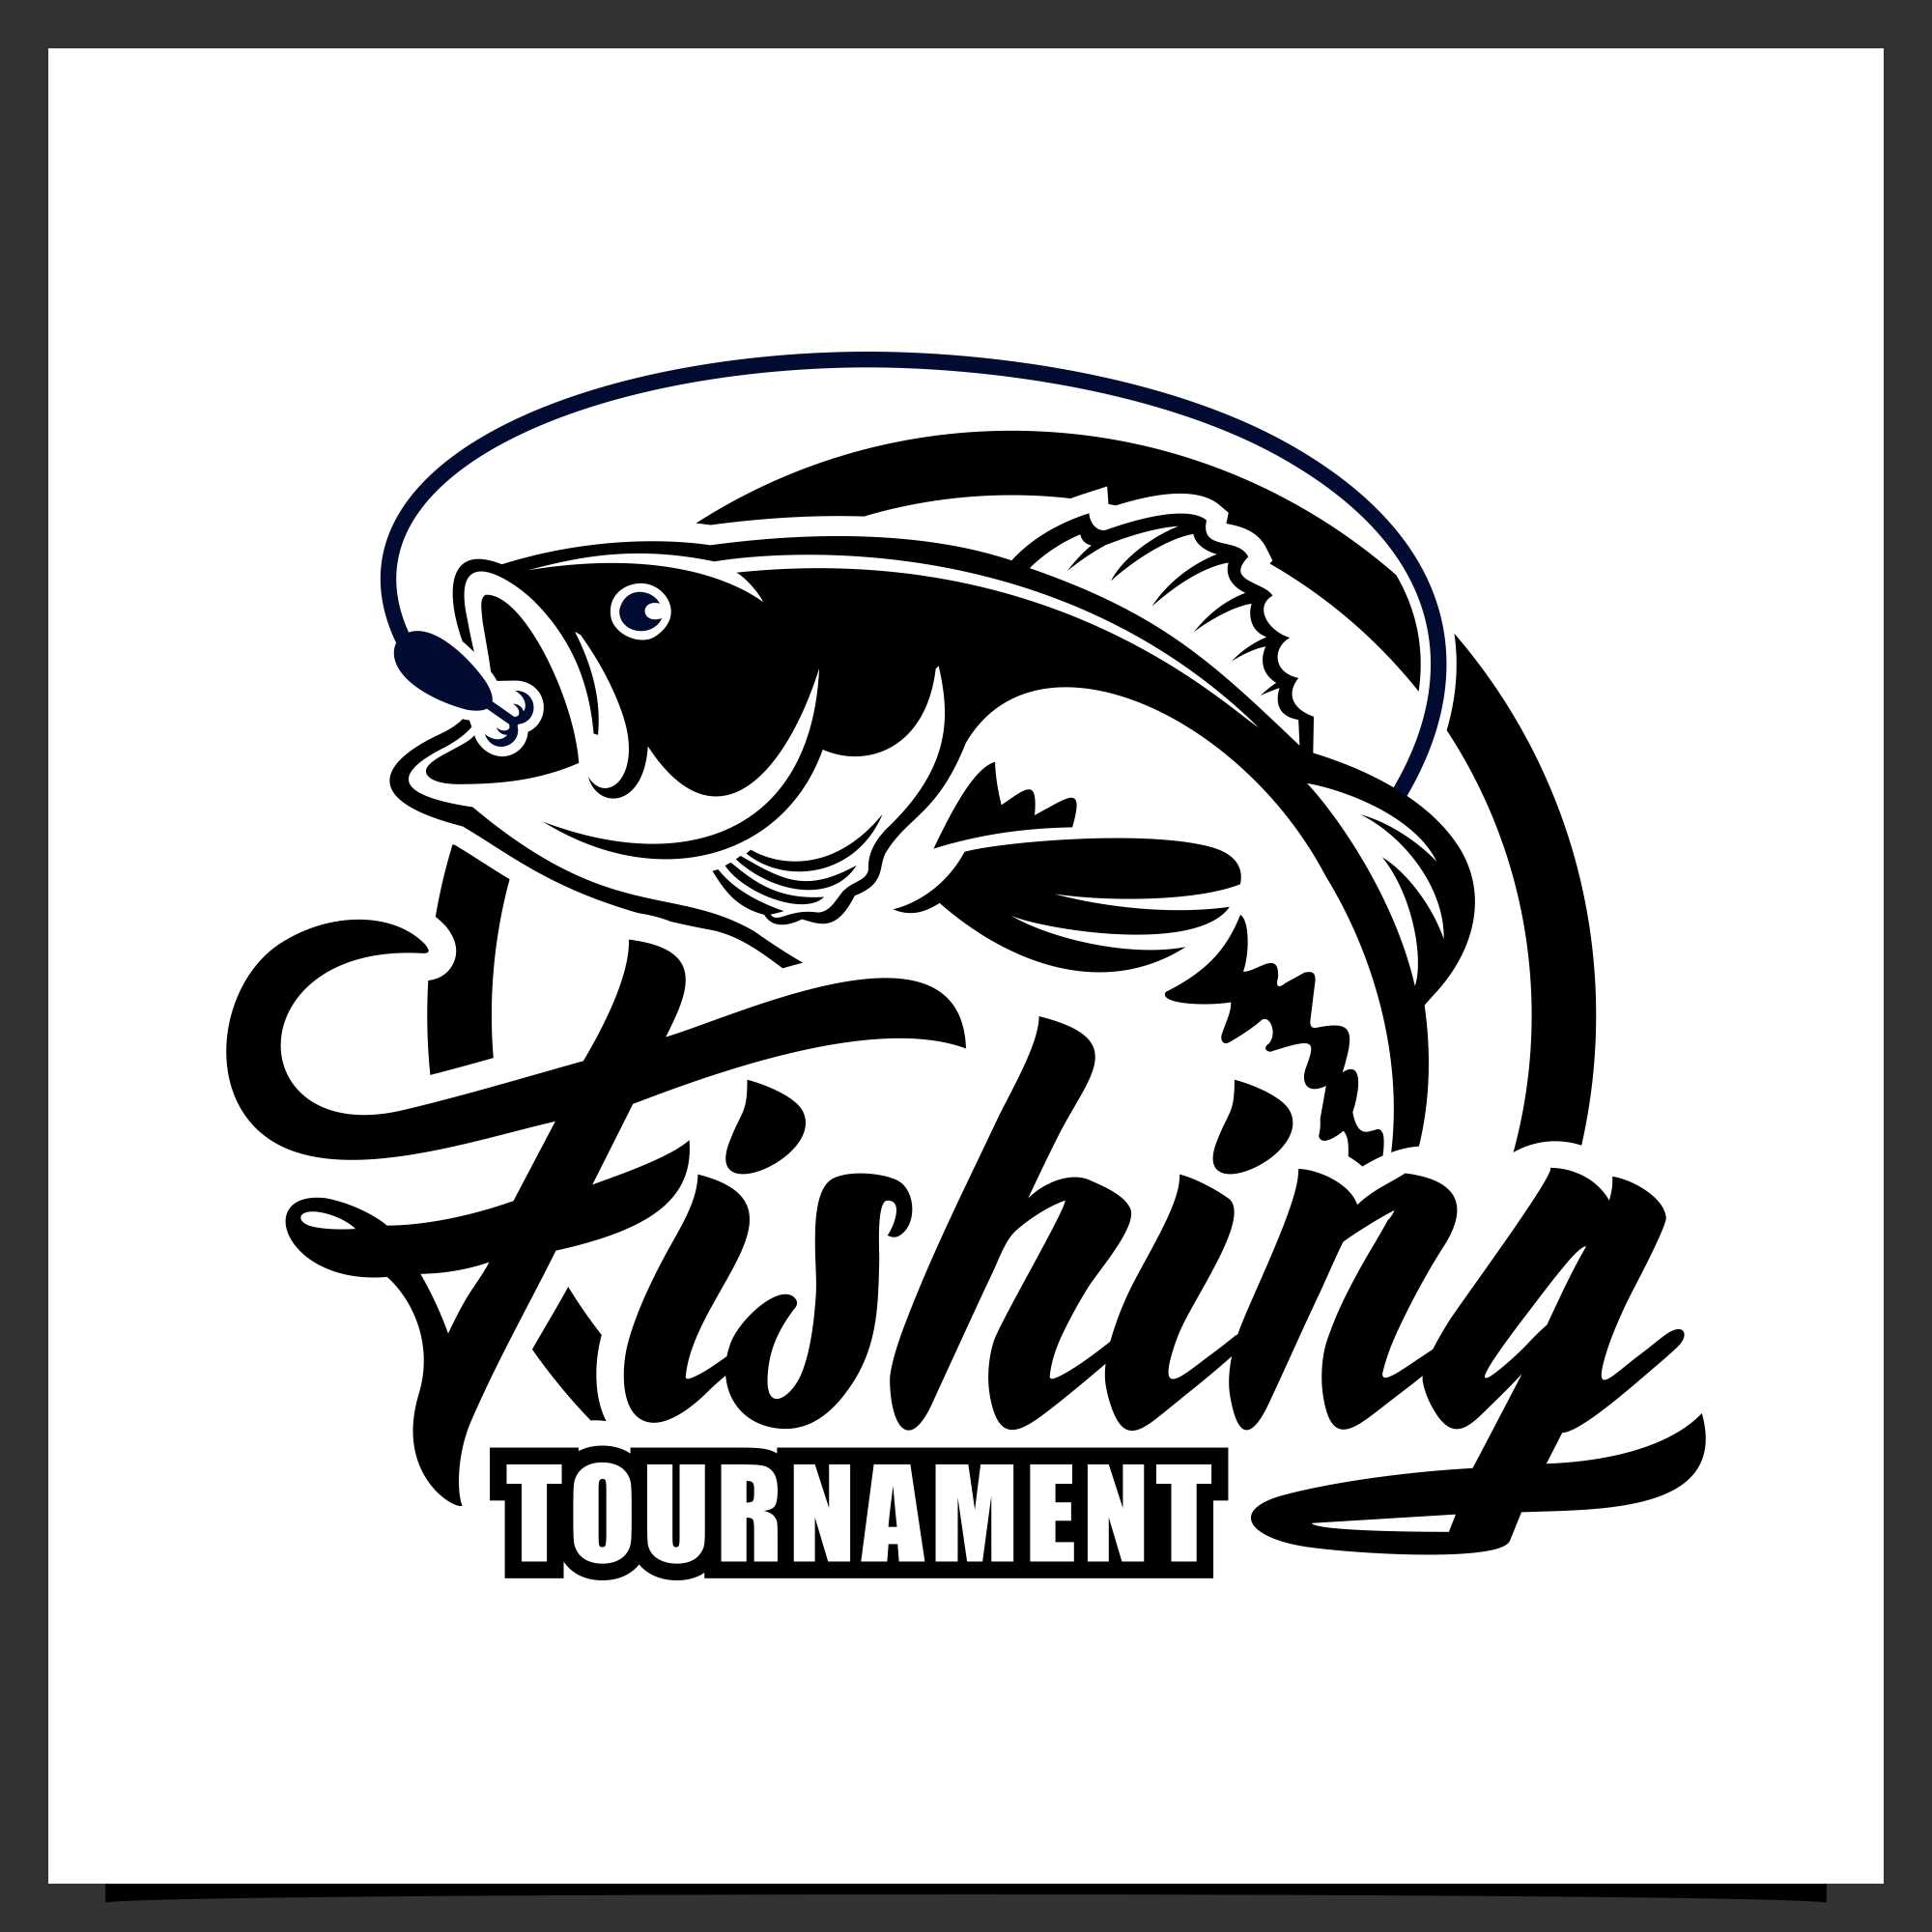 Set fishing tournament design logo Royalty Free Vector Image